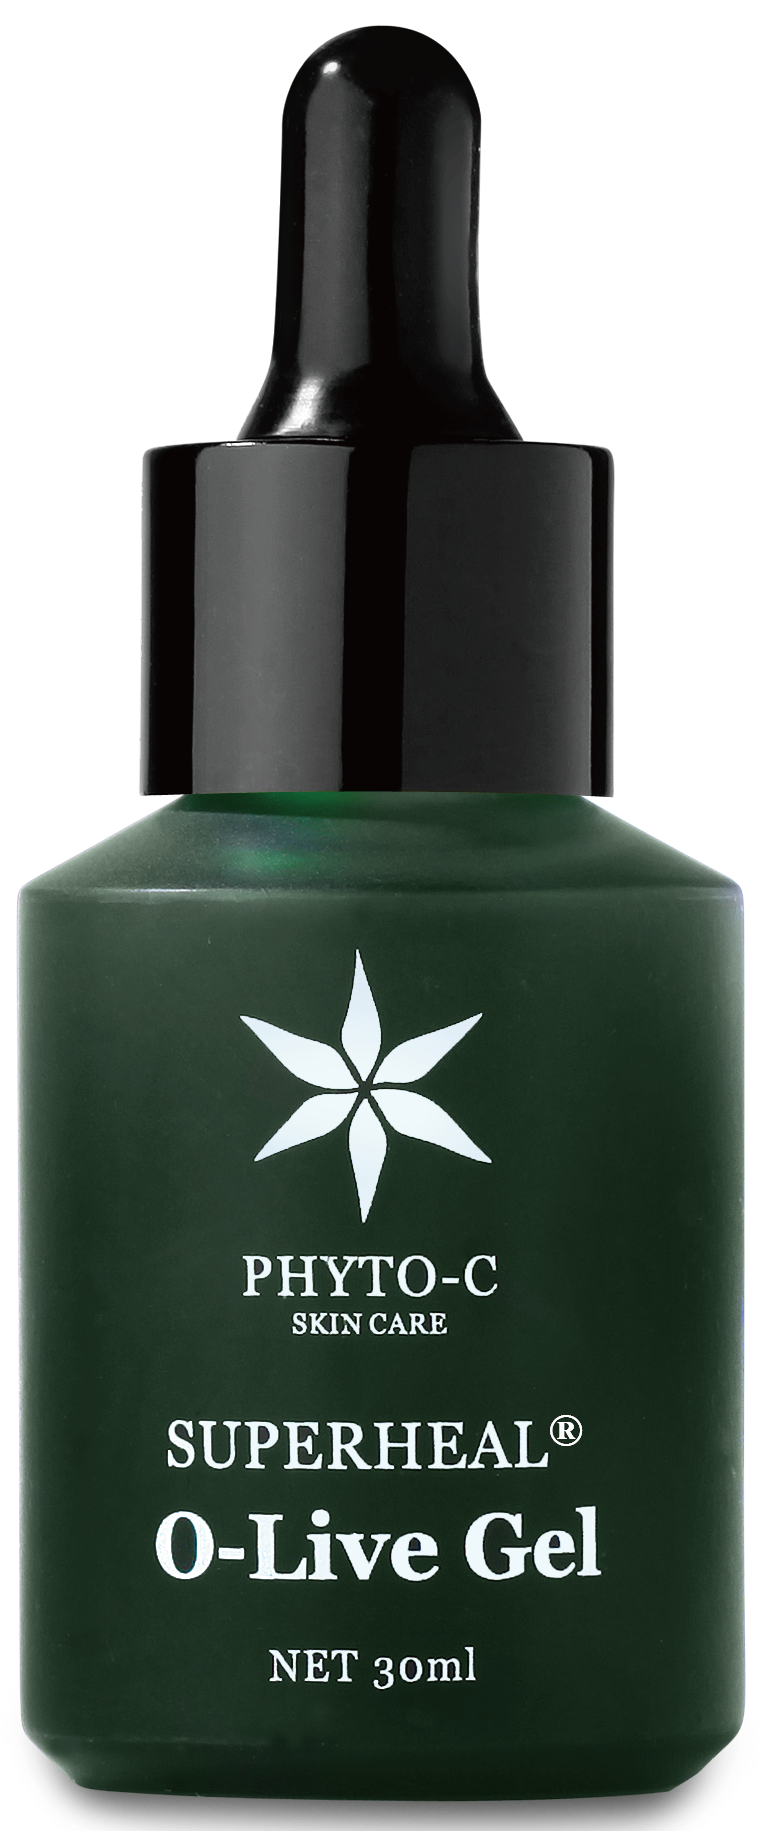 PHYTO-C 橄欖高效修復精華 SUPERHEAL® O-Live Gel